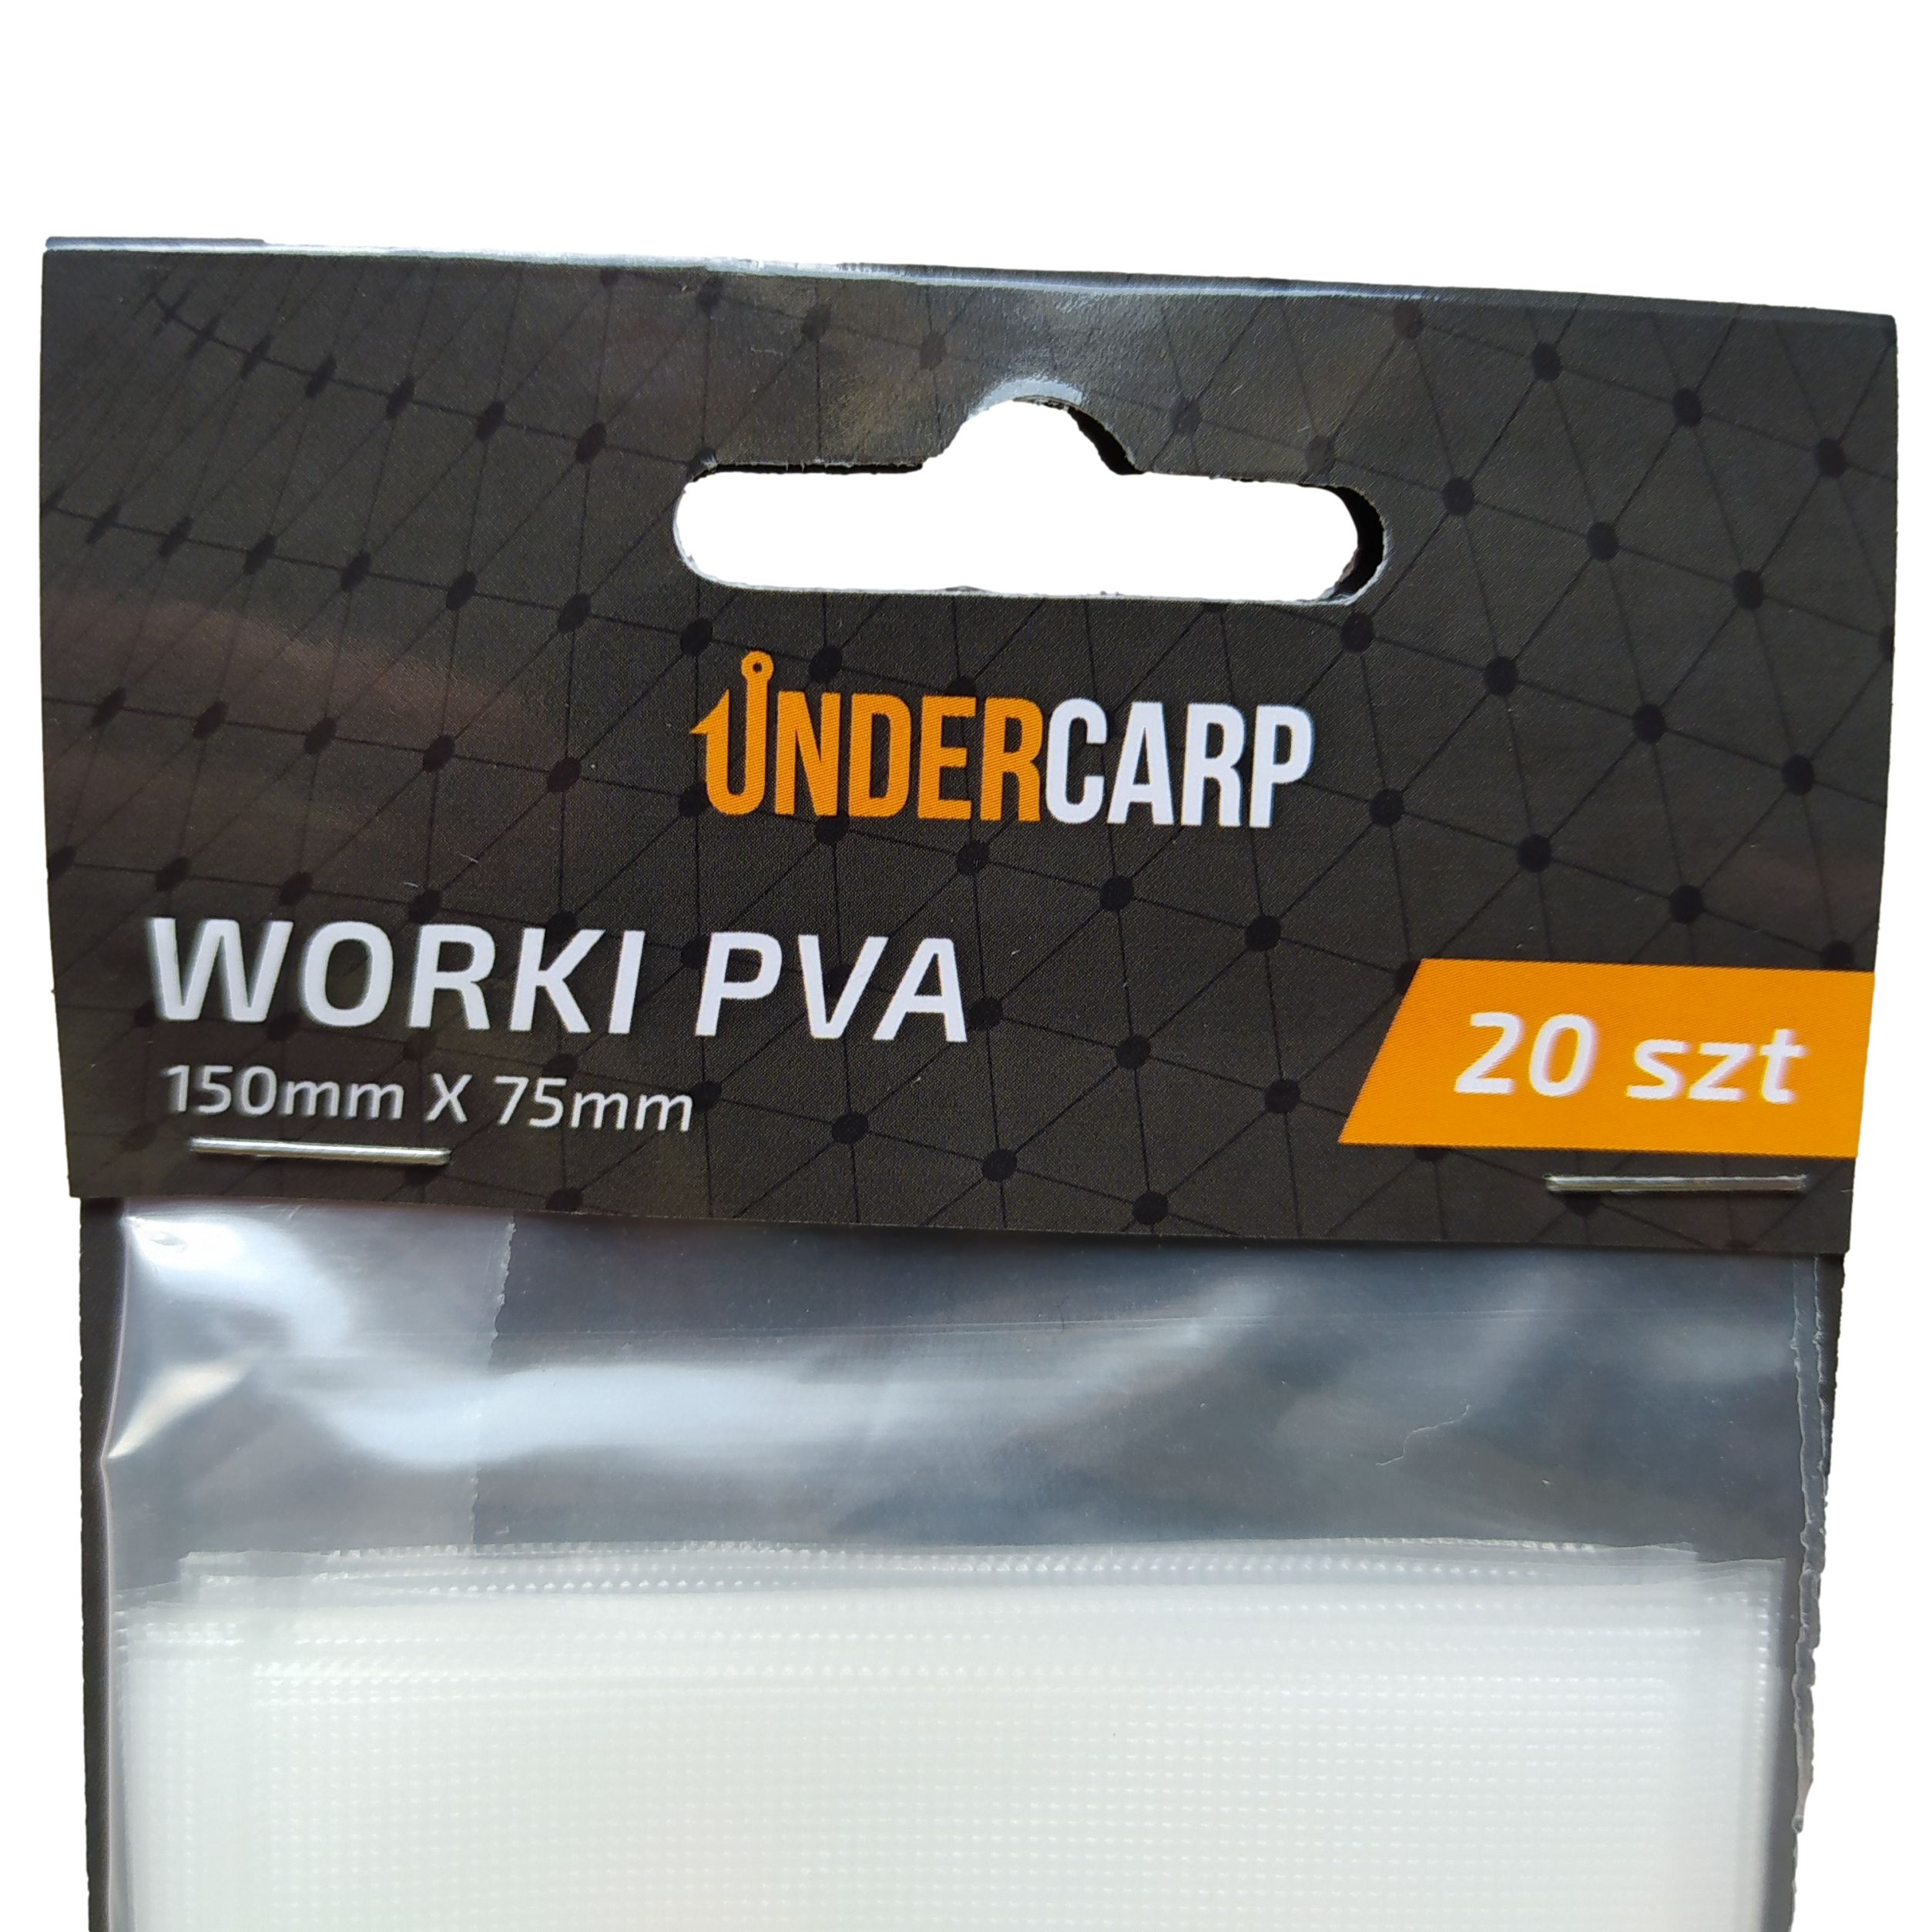 UnderCarp Worki Pva 150mm x 75mm 20 szt. Europe Premium Online Carp Shop